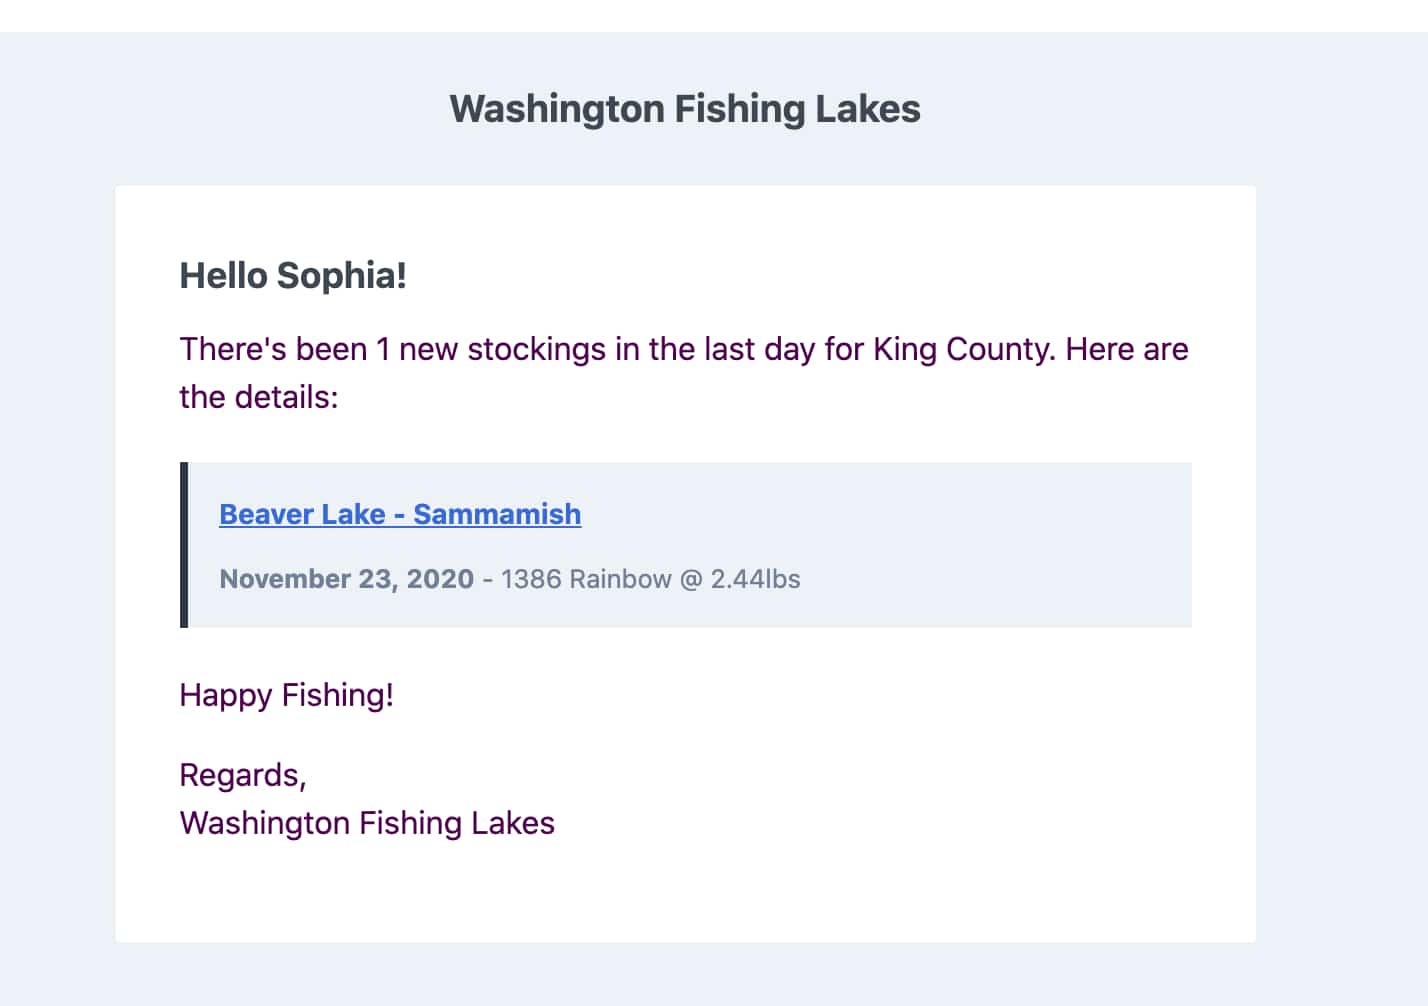 Image of lake stocking email